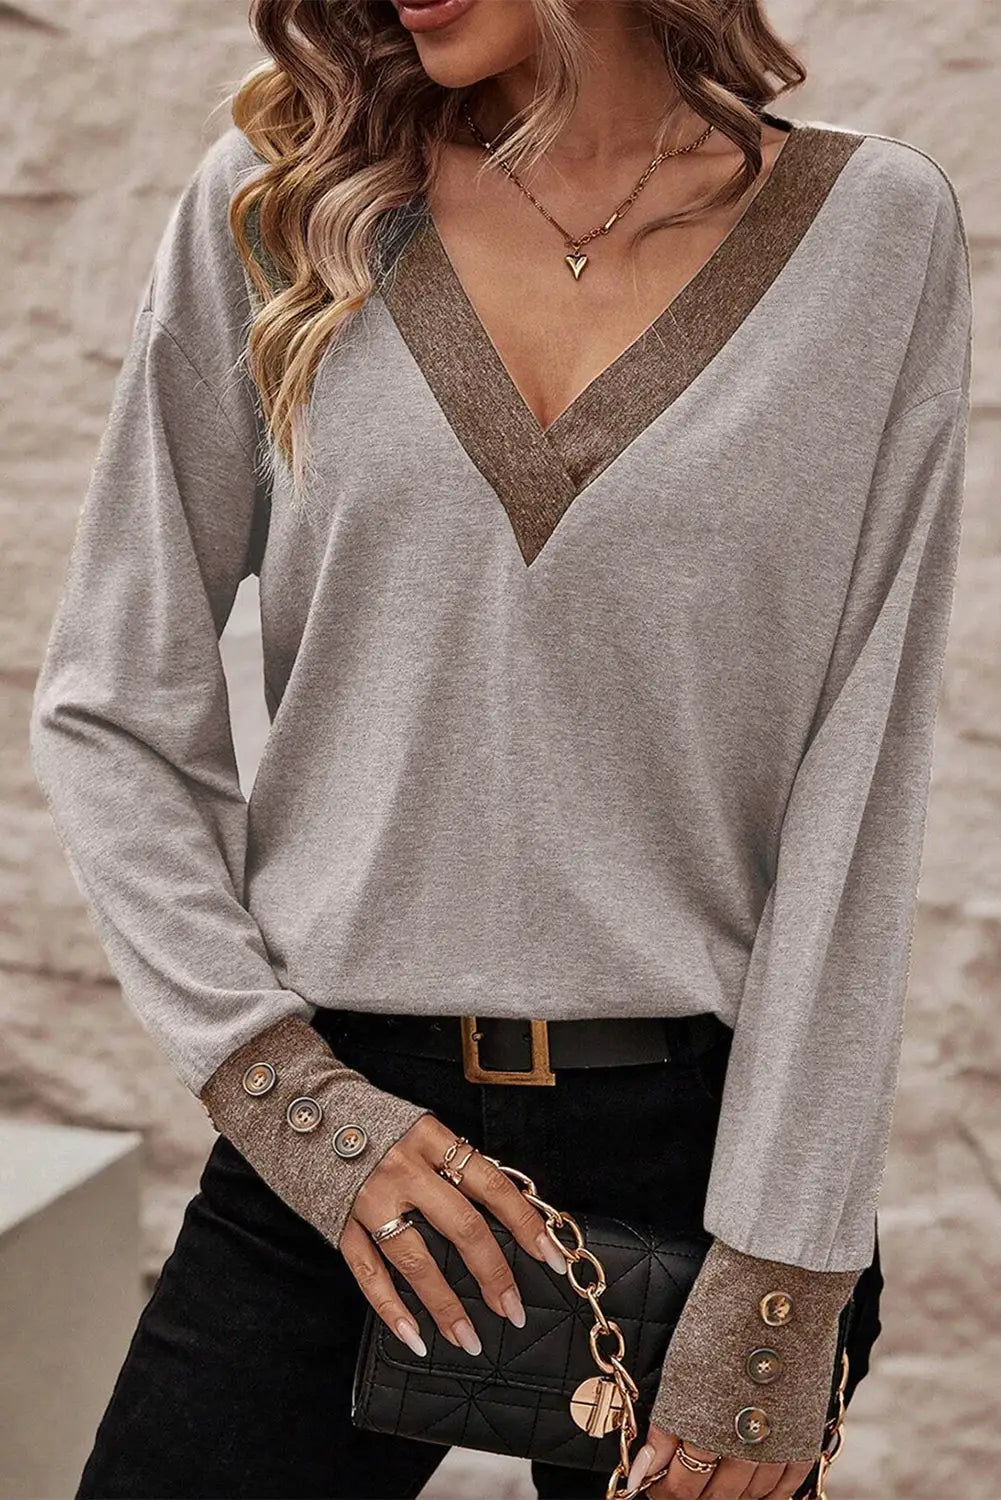 Khaki contrast v neck button cuffed long sleeve top - l / 65% polyester + 30% viscose + 5% elastane - tops